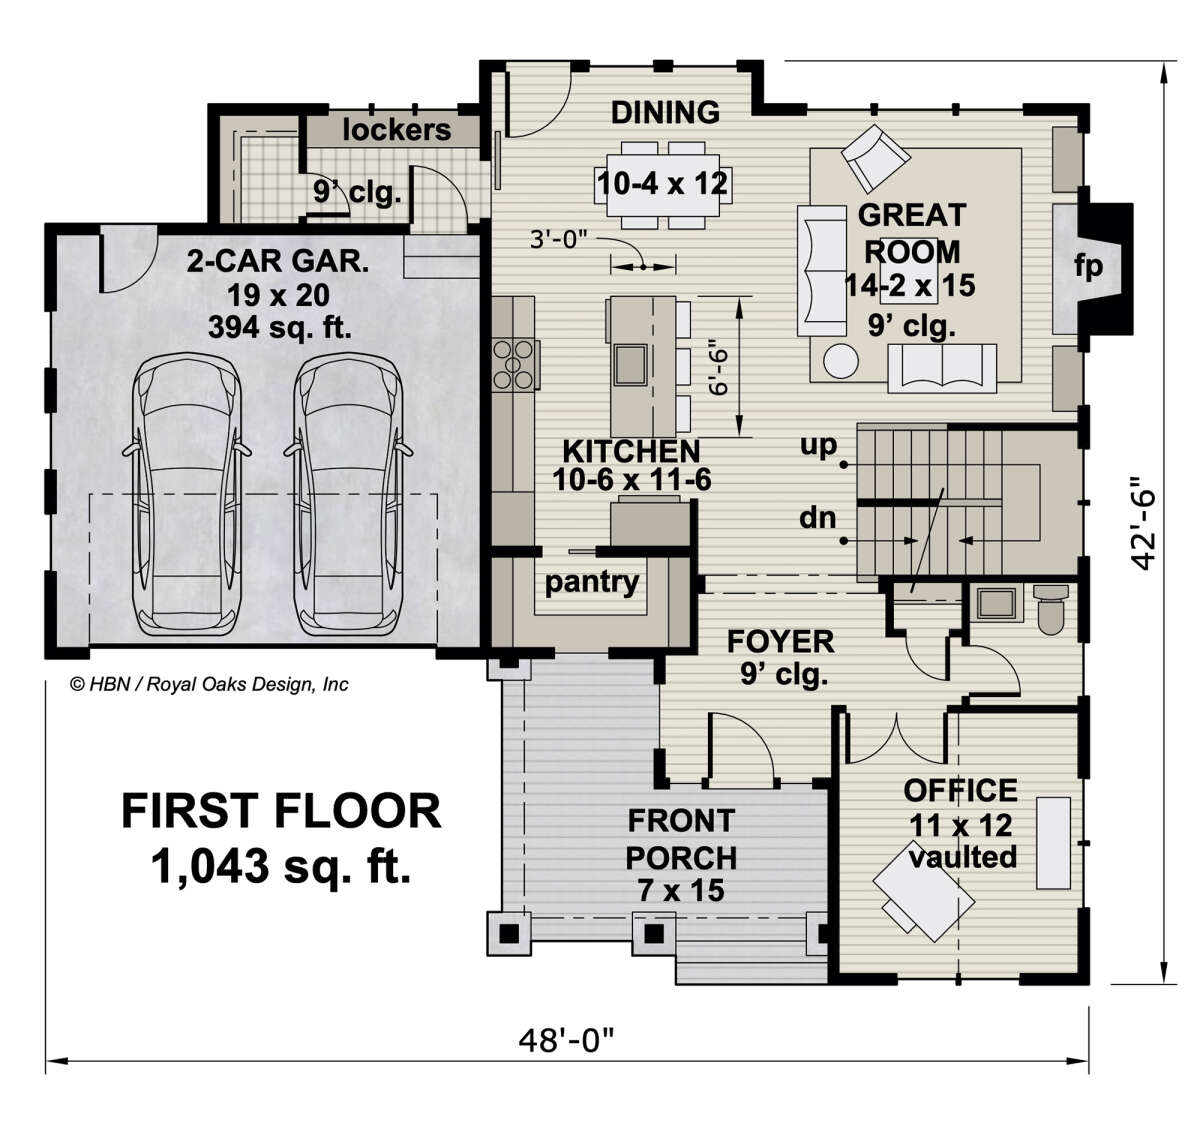 Craftsman Plan: 2,167 Square Feet, 3 Bedrooms, 2.5 Bathrooms - 098